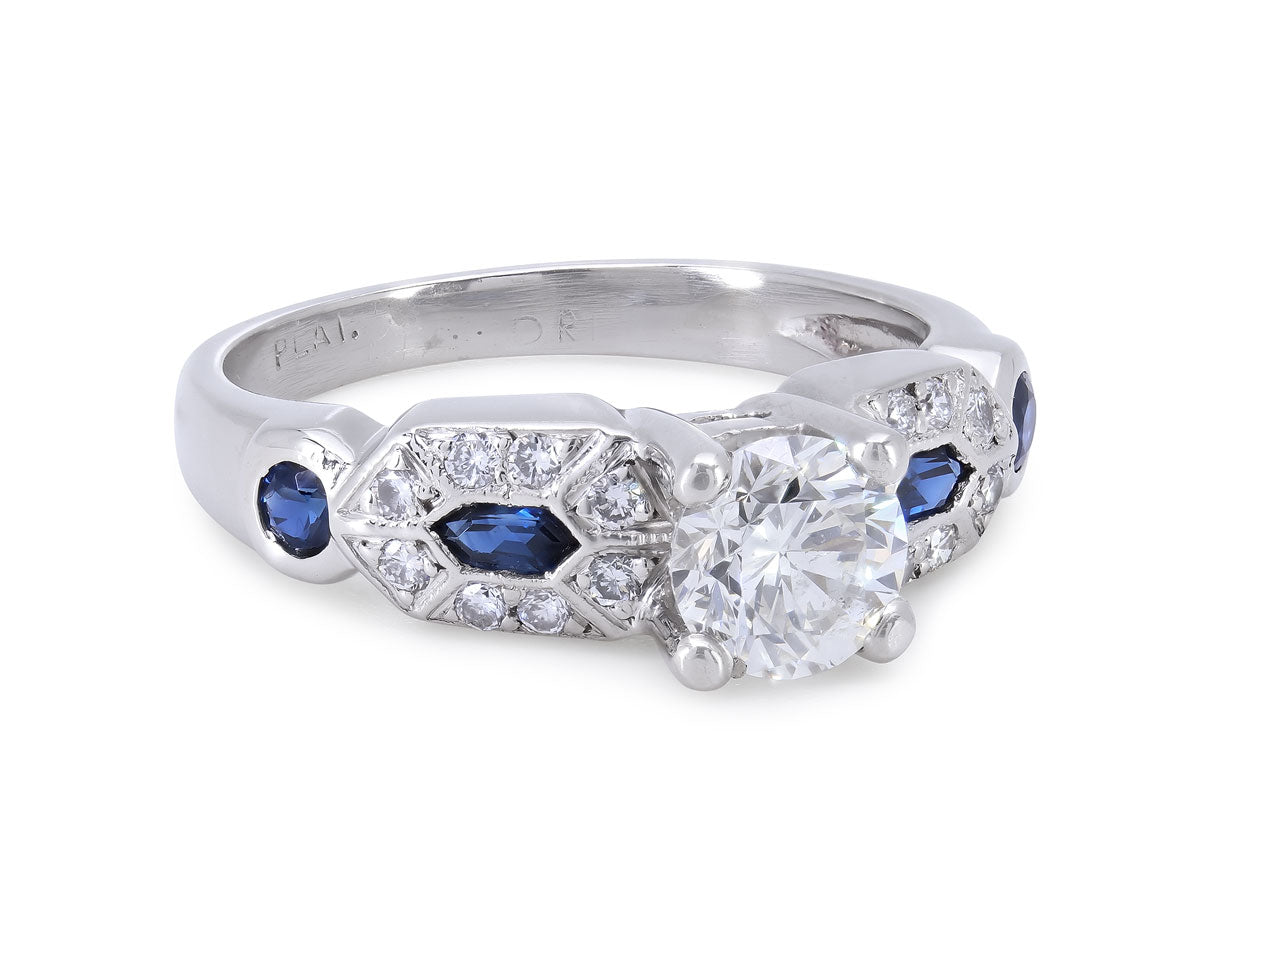 Tacori Diamond and Sapphire Ring in Platinum